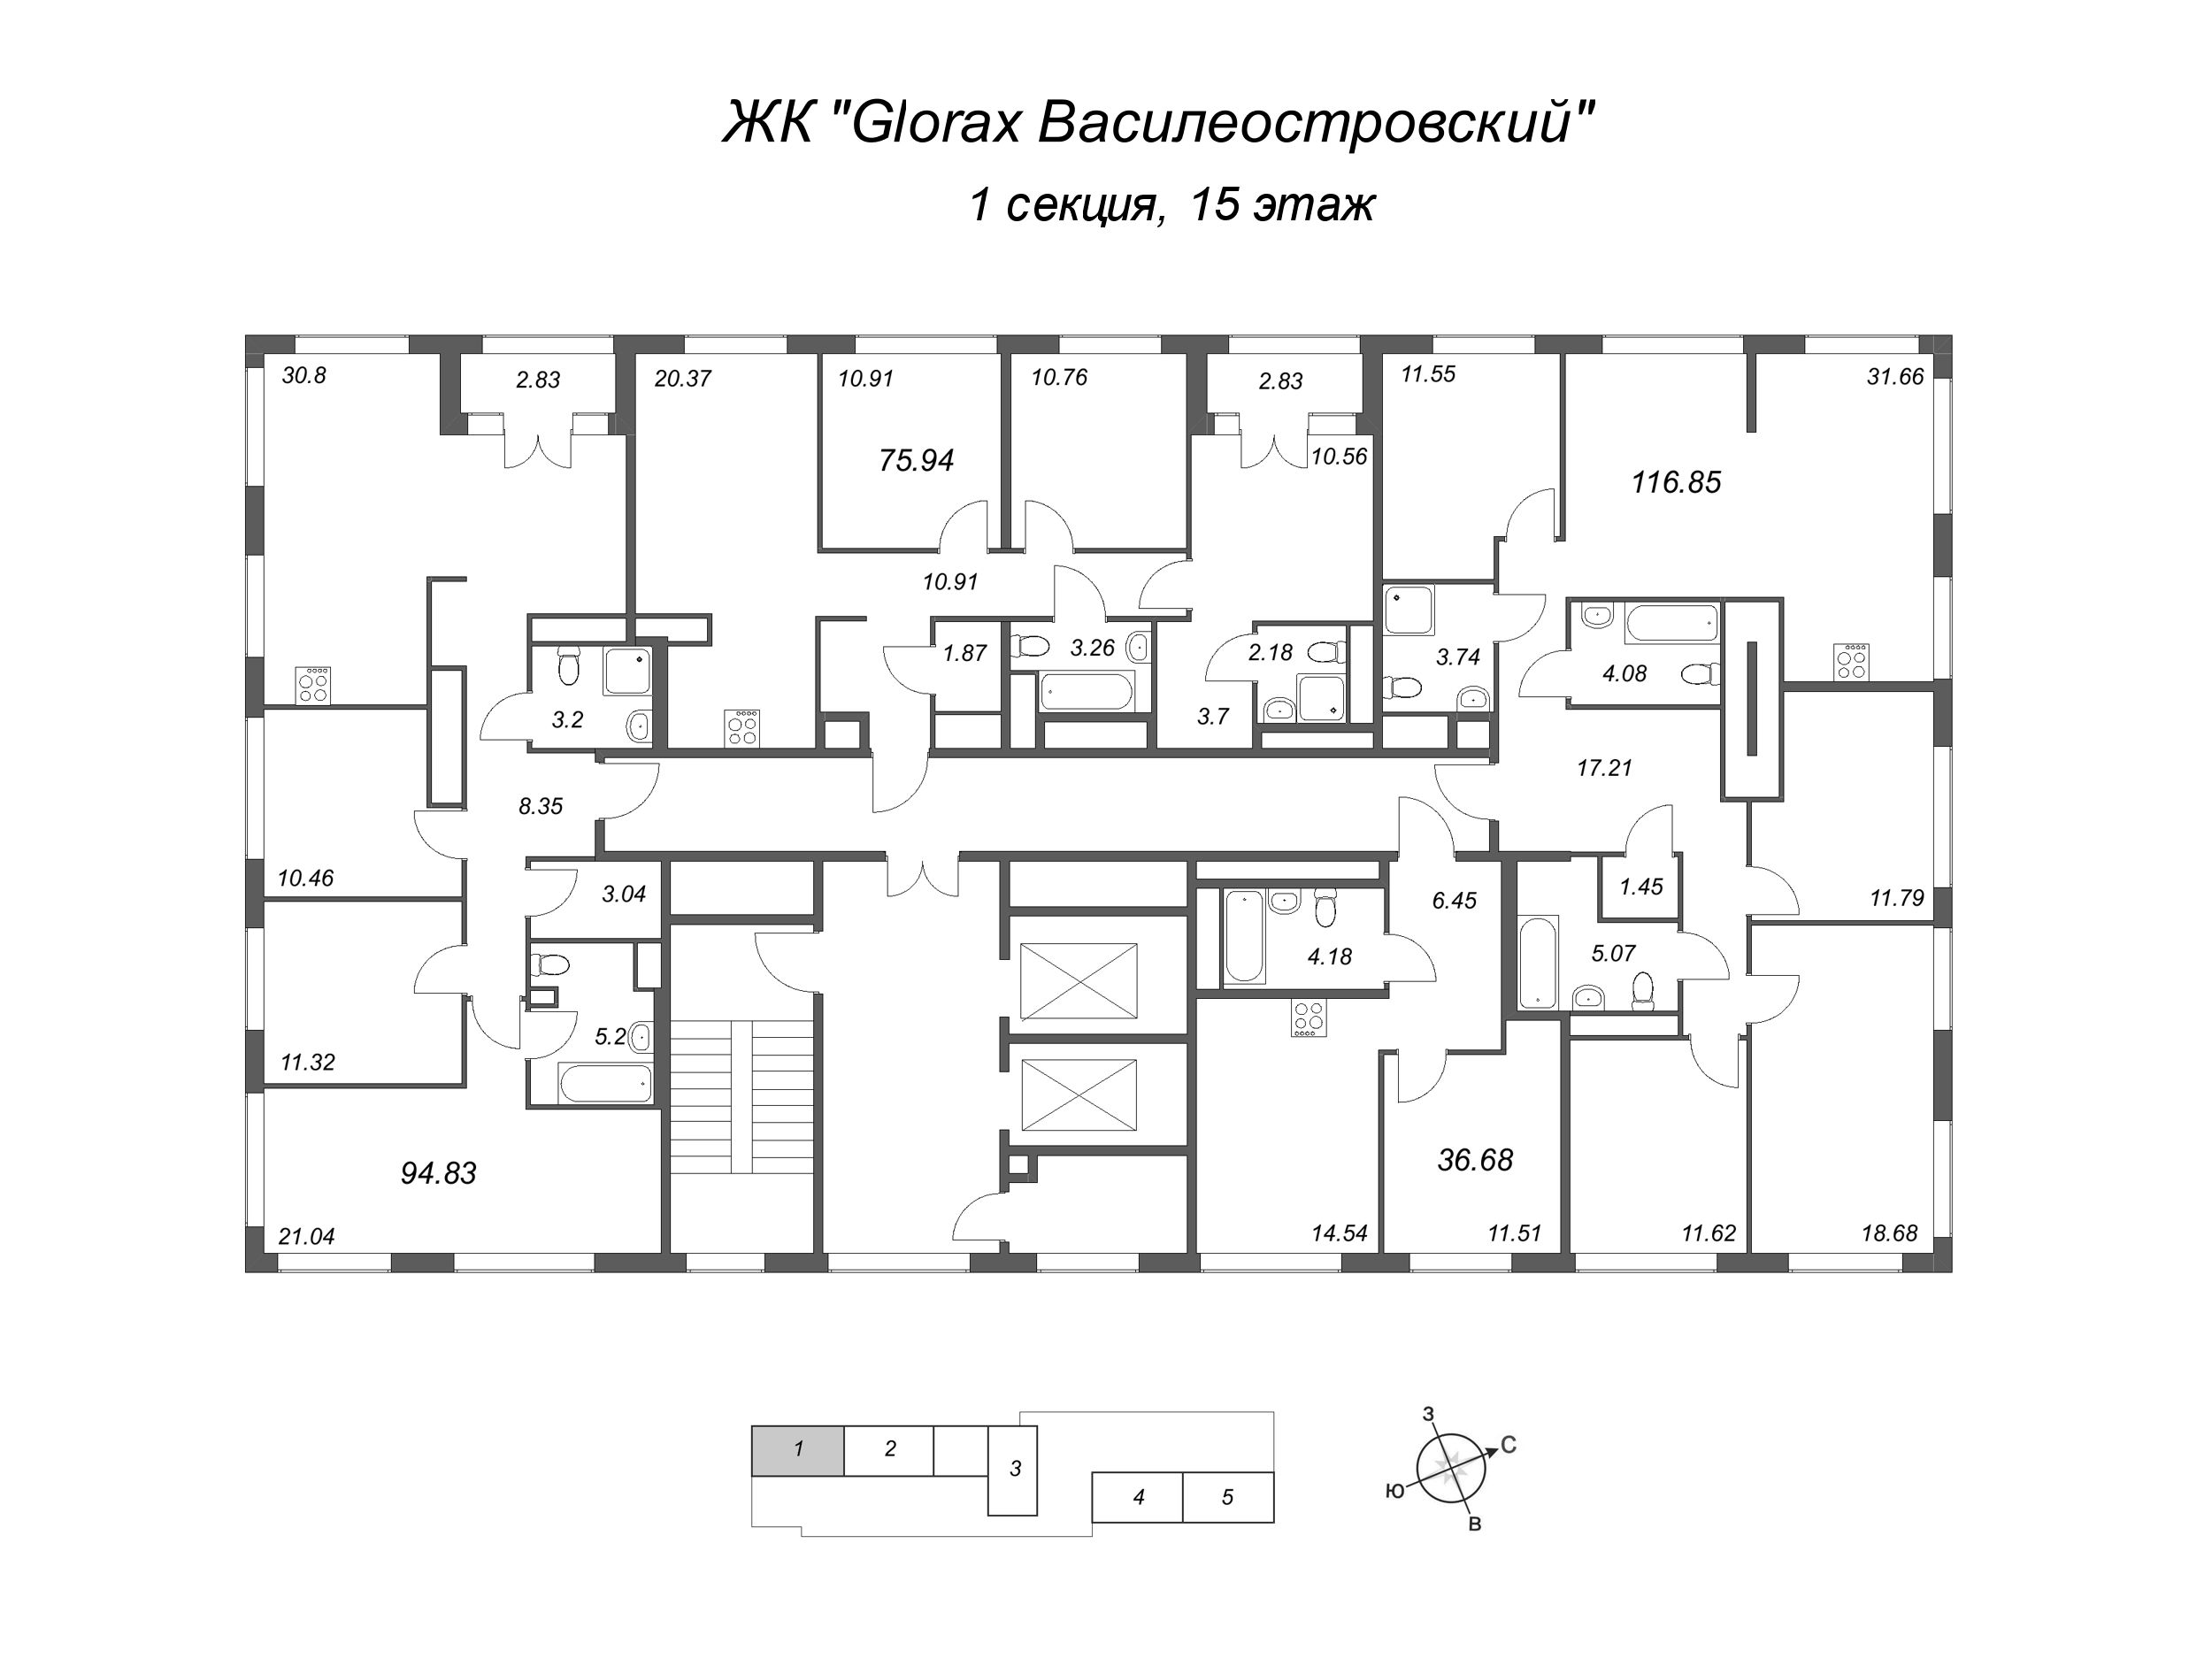 4-комнатная (Евро) квартира, 94.83 м² - планировка этажа